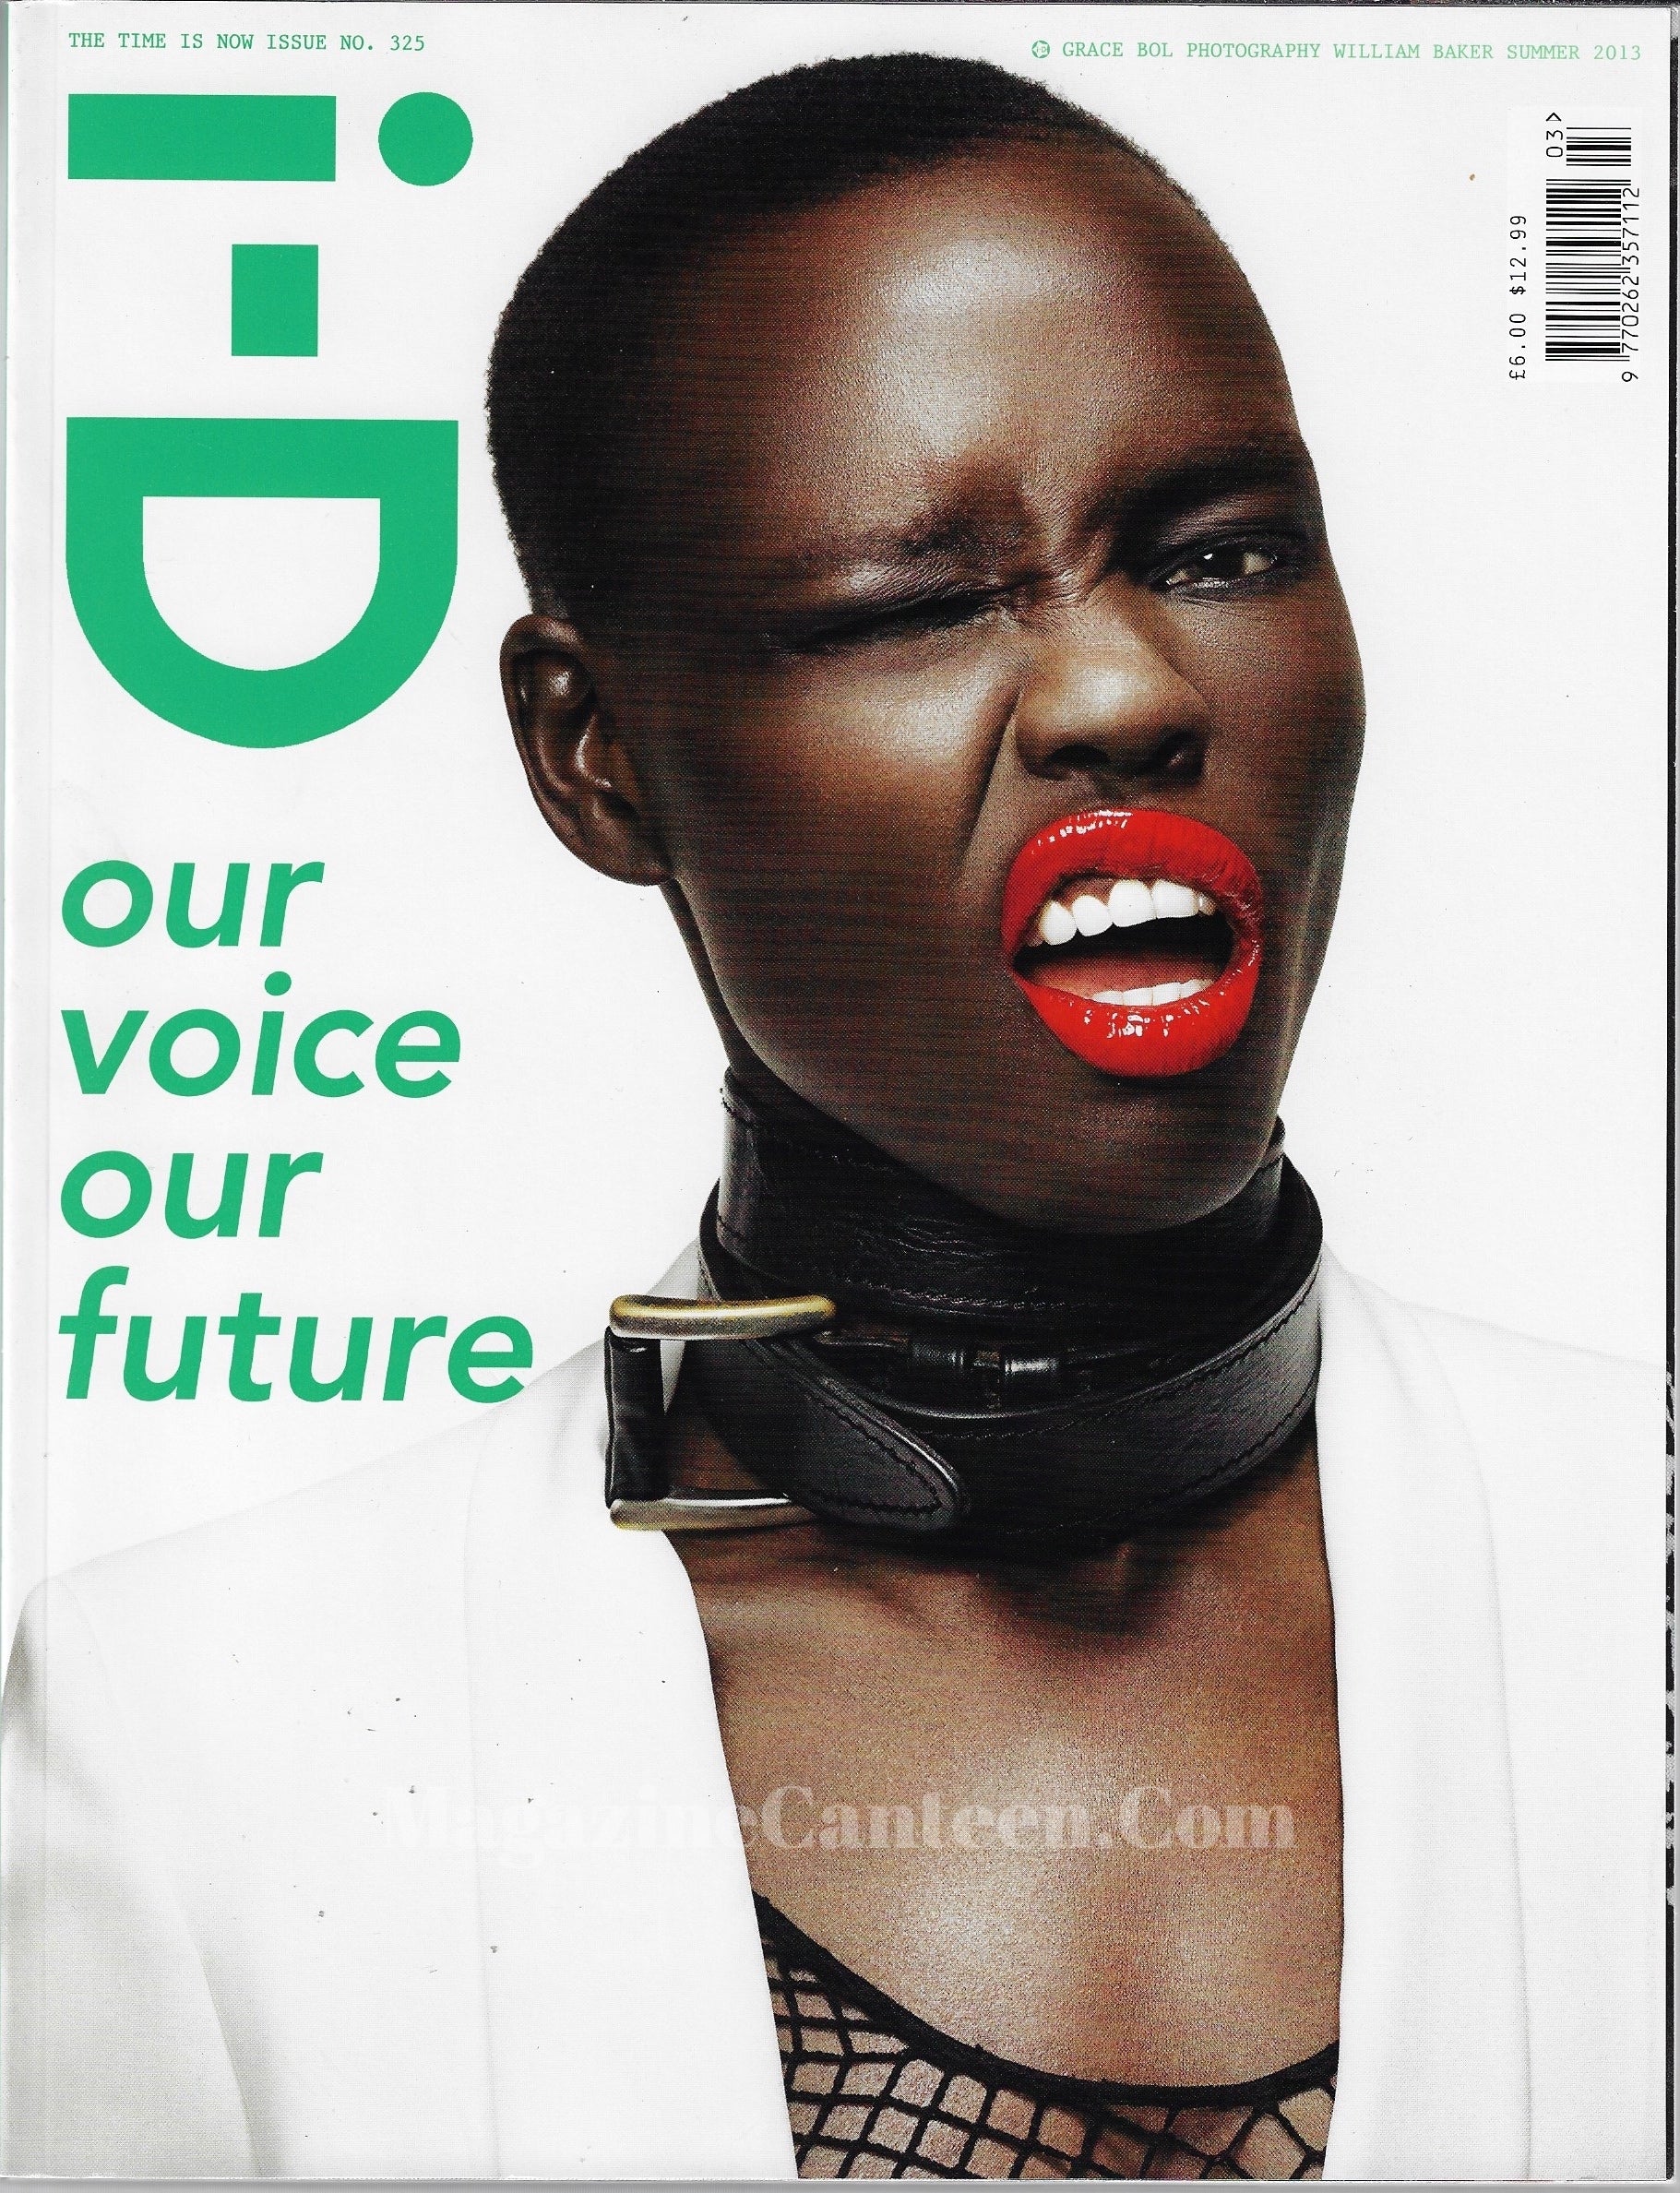 I-D Magazine 325 - Grace Bol 2013